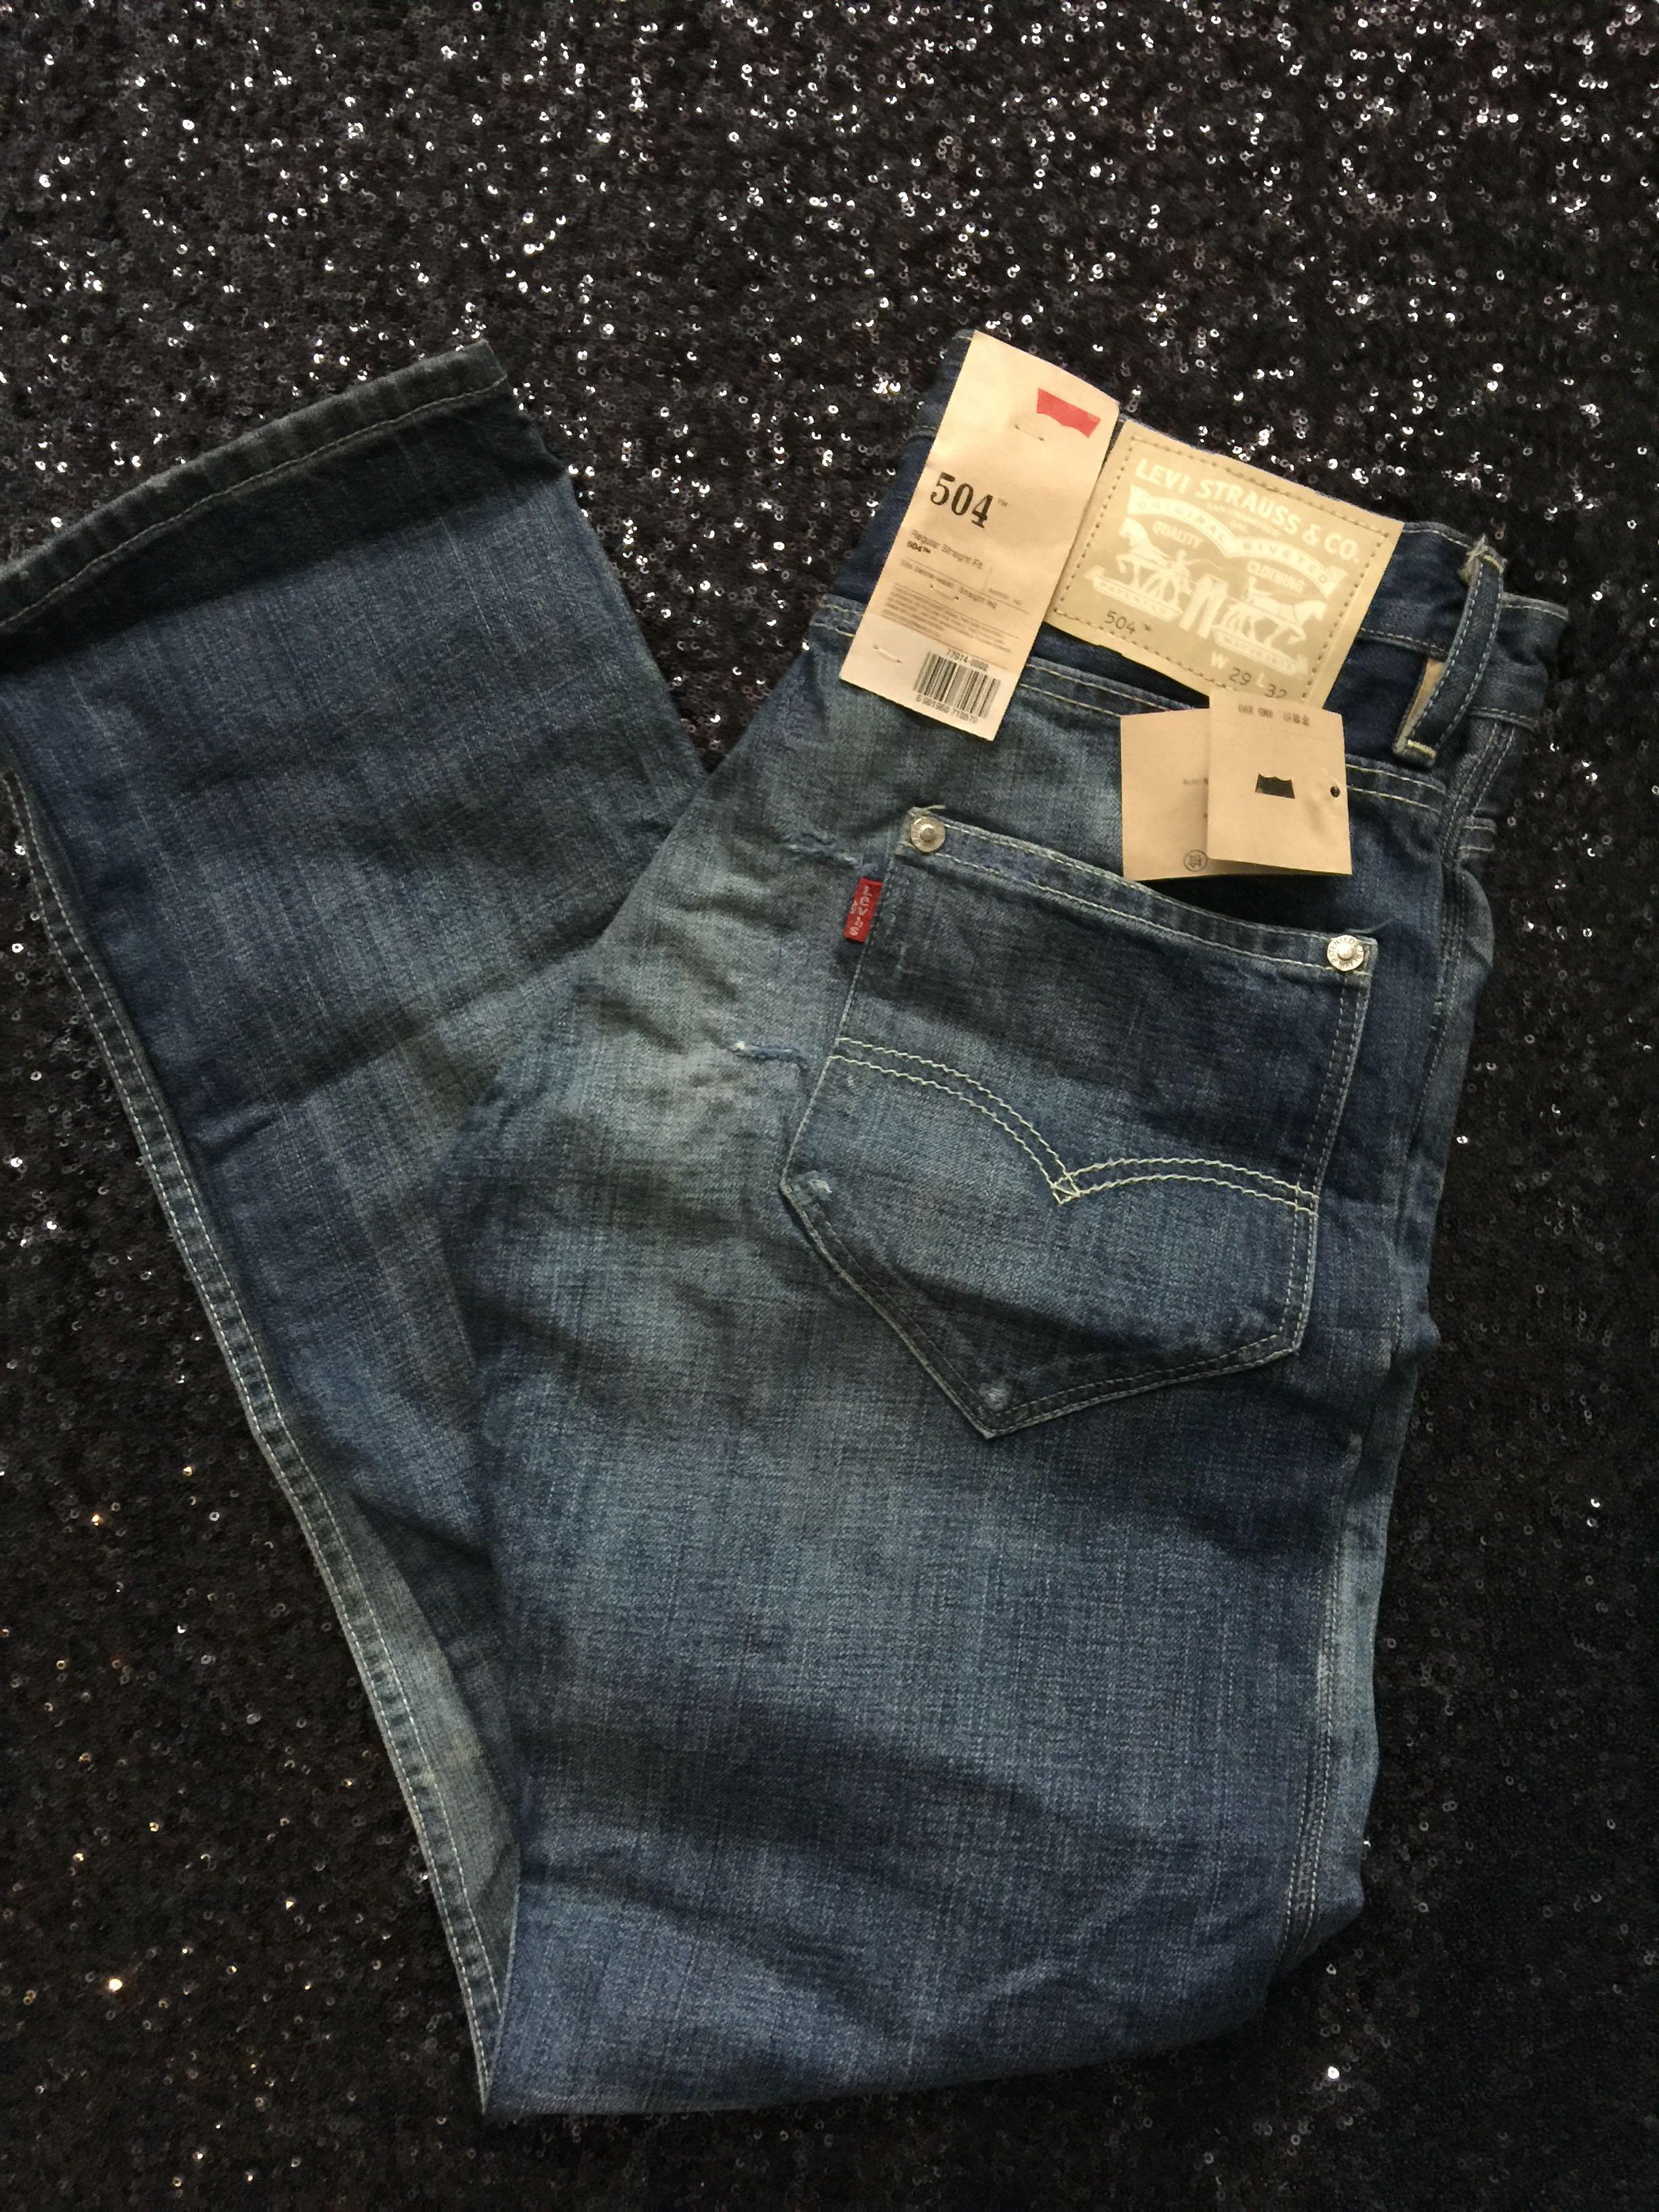 levi's men's 504 regular straight fit jeans